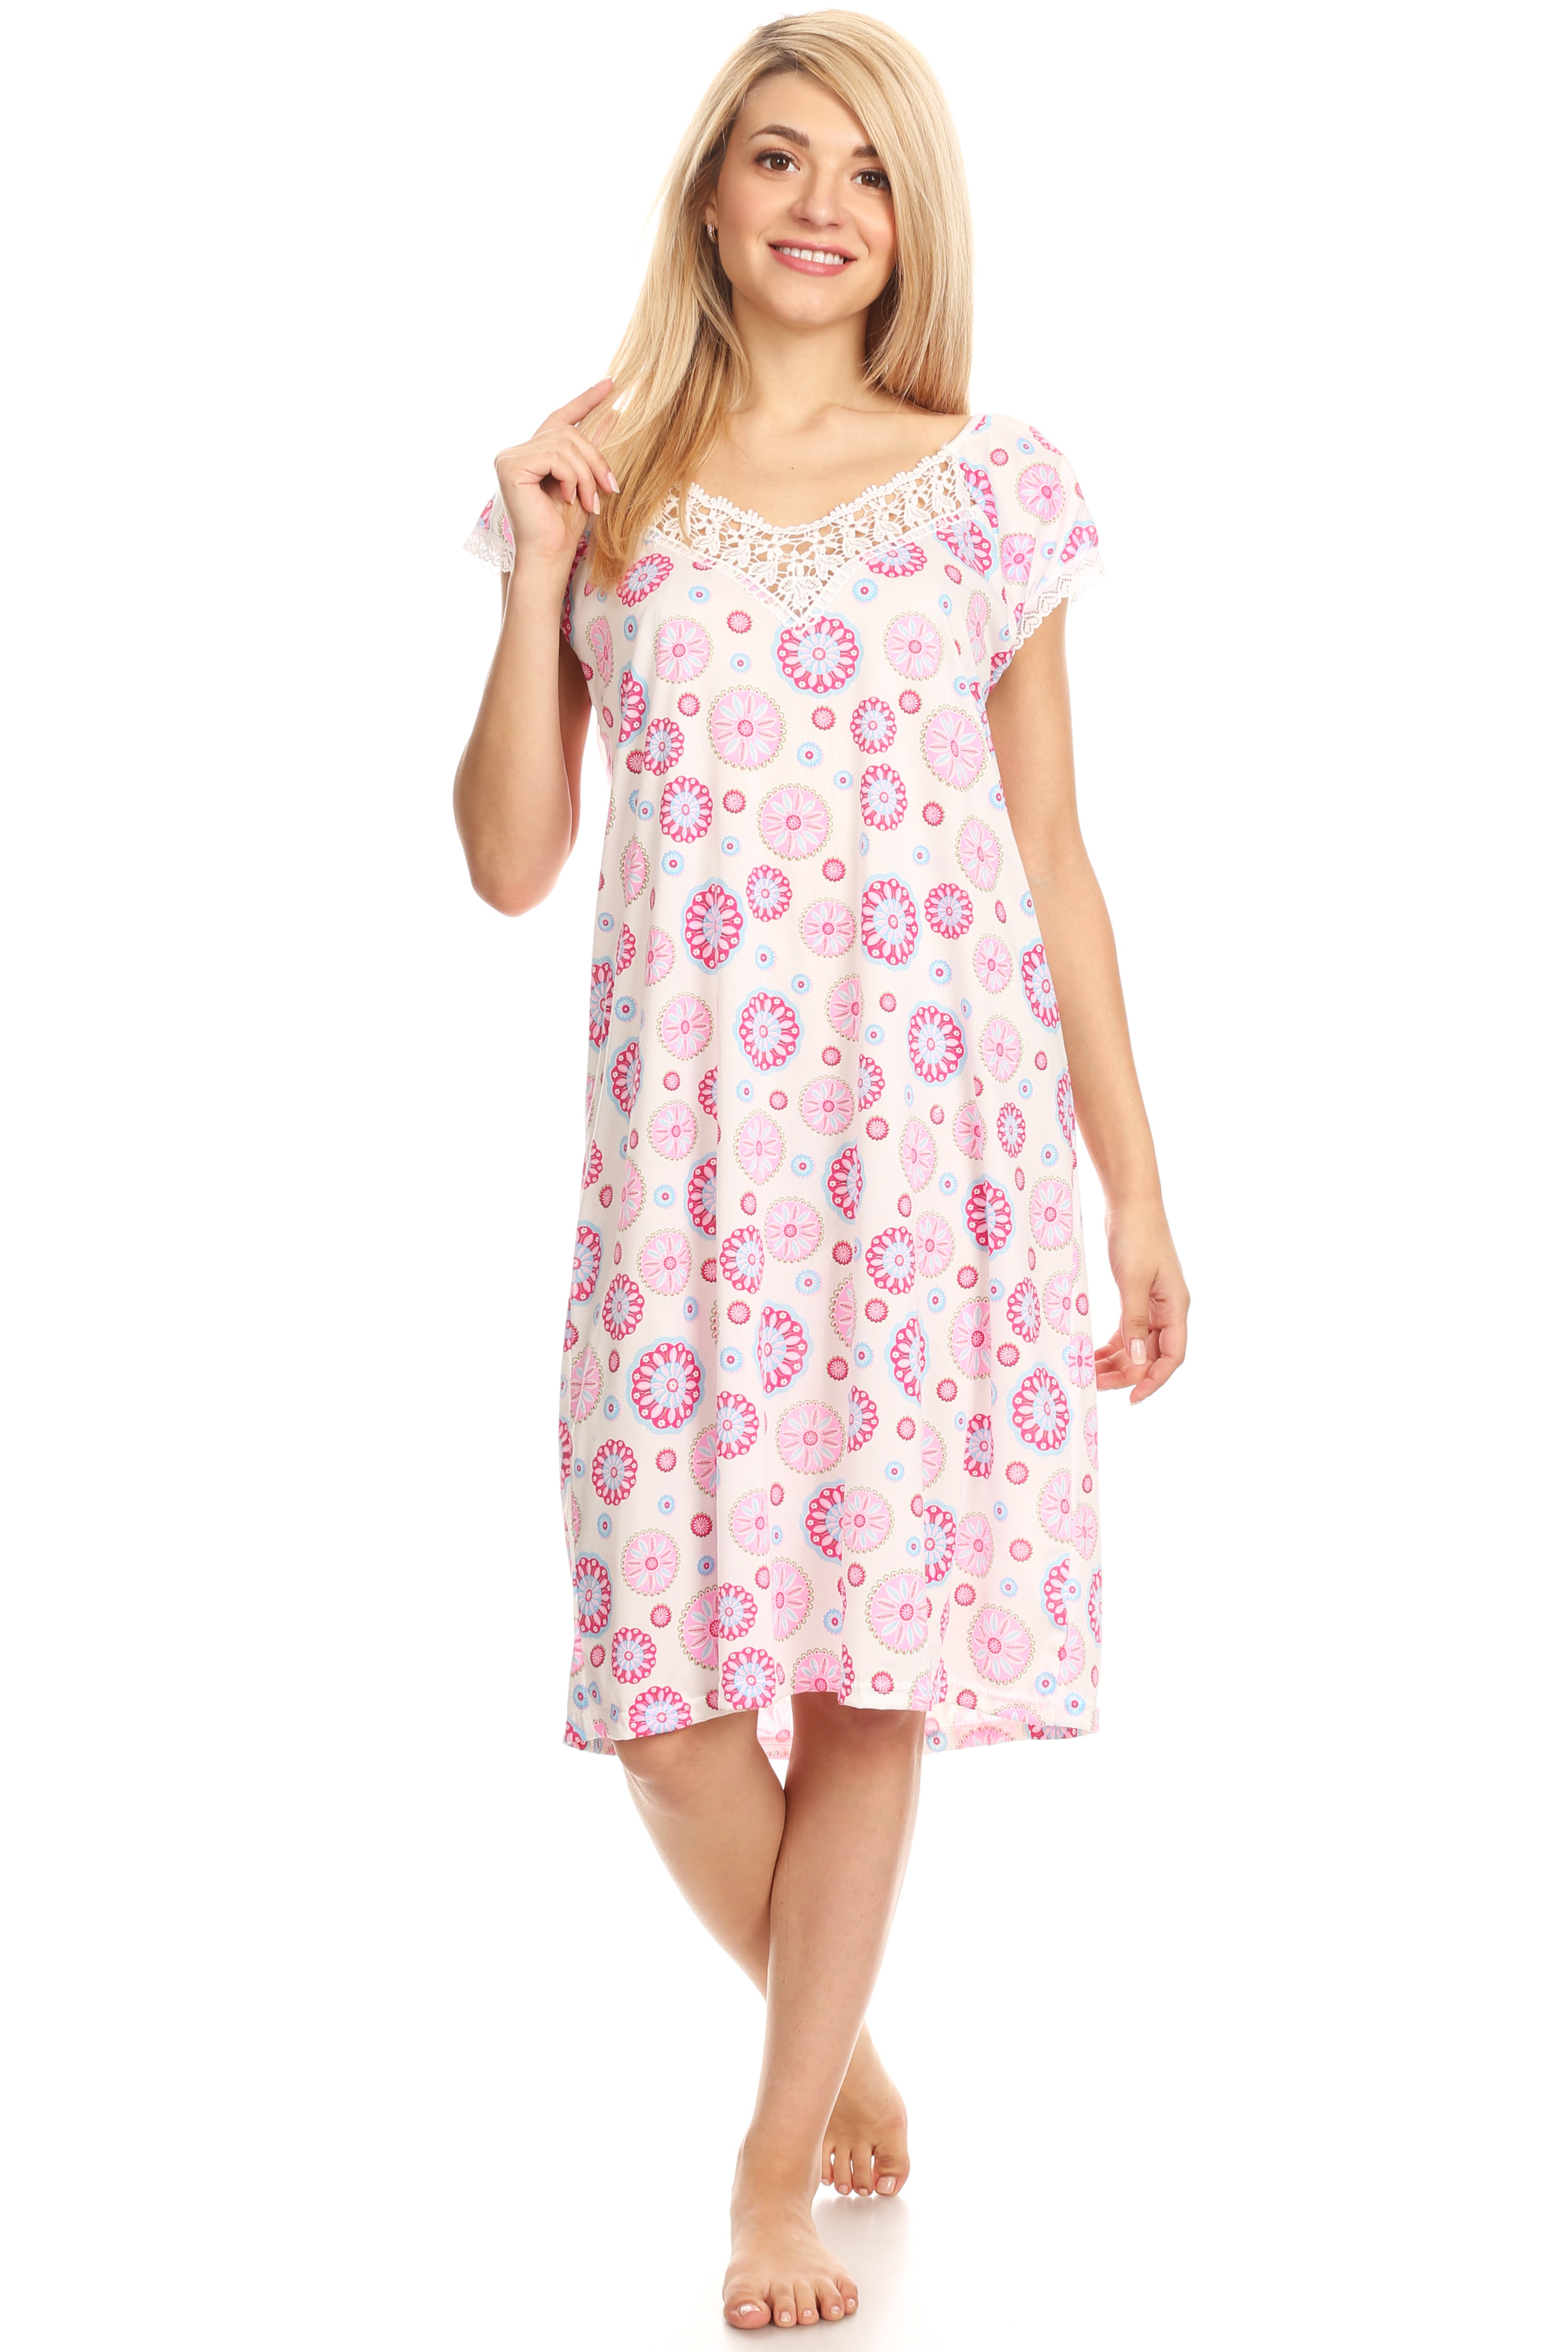 Nightgown Sleepwear Woman Short Sleeve Sleep Dress Size 3x 